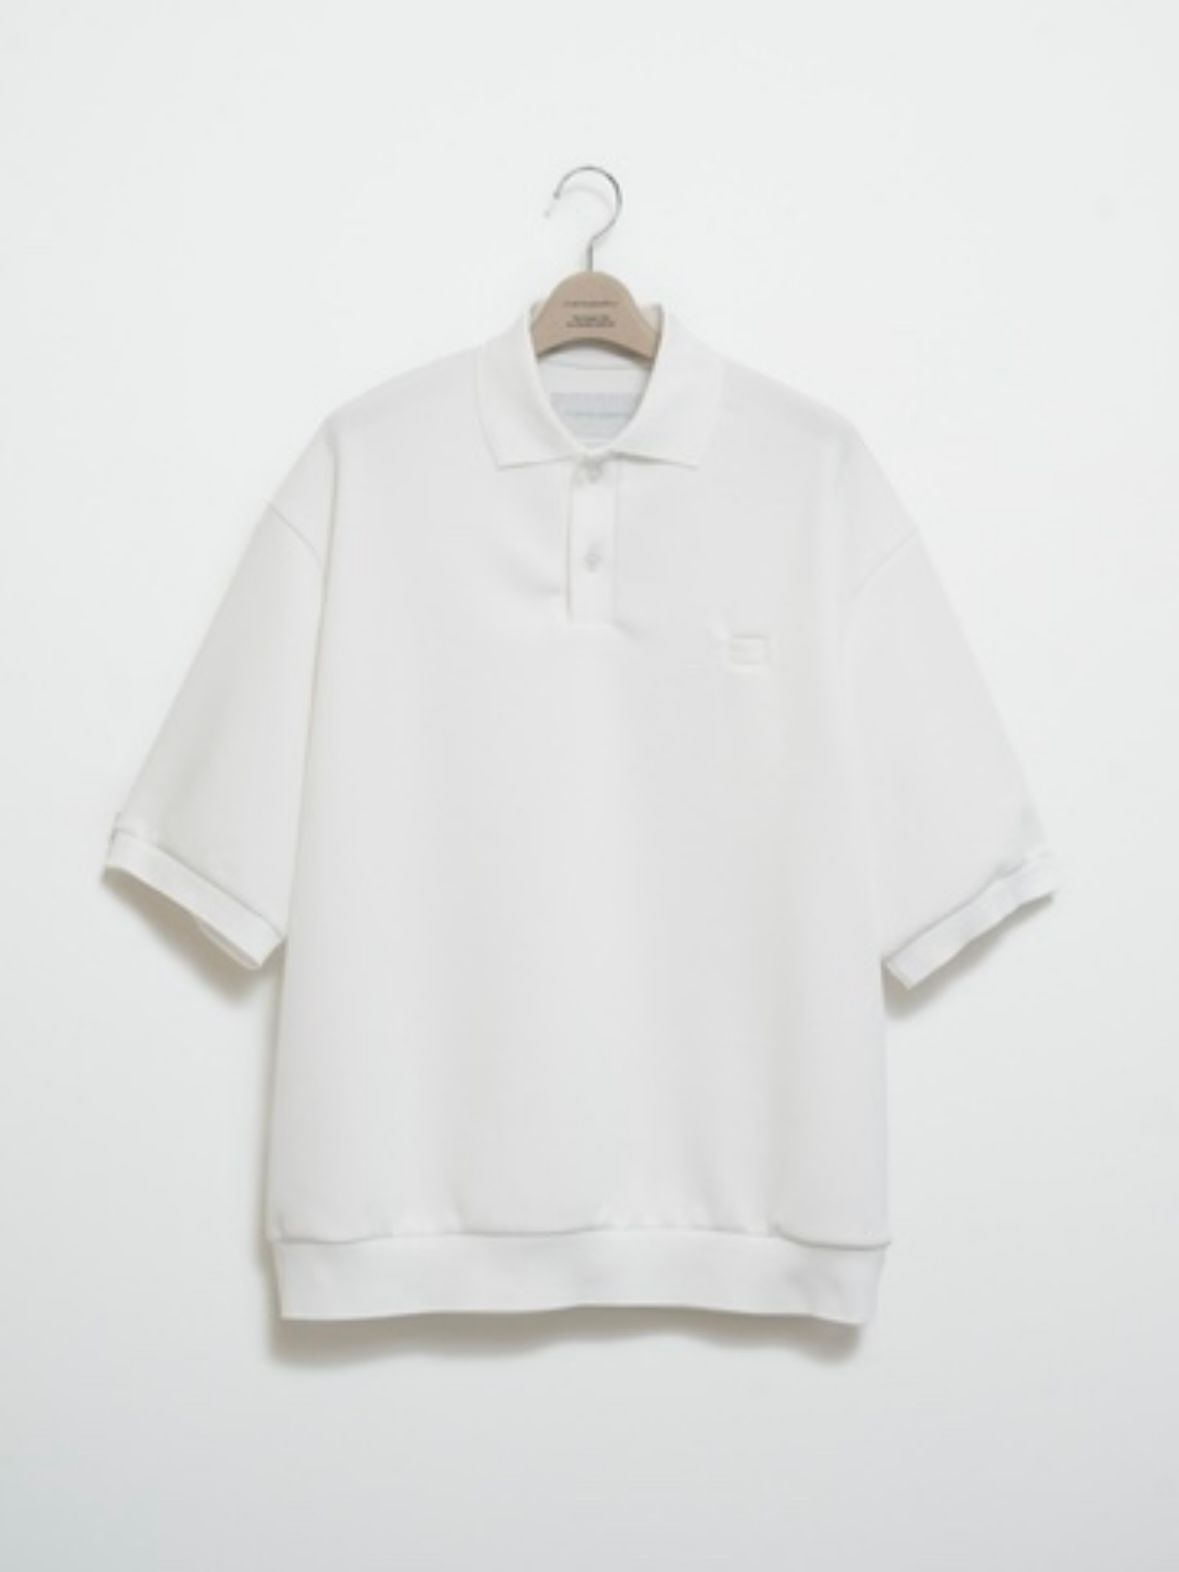 【23SS】オーバーサイズ ポロシャツ / LARGE POLO SHIRT / ホワイト - ホワイト - 1(S)